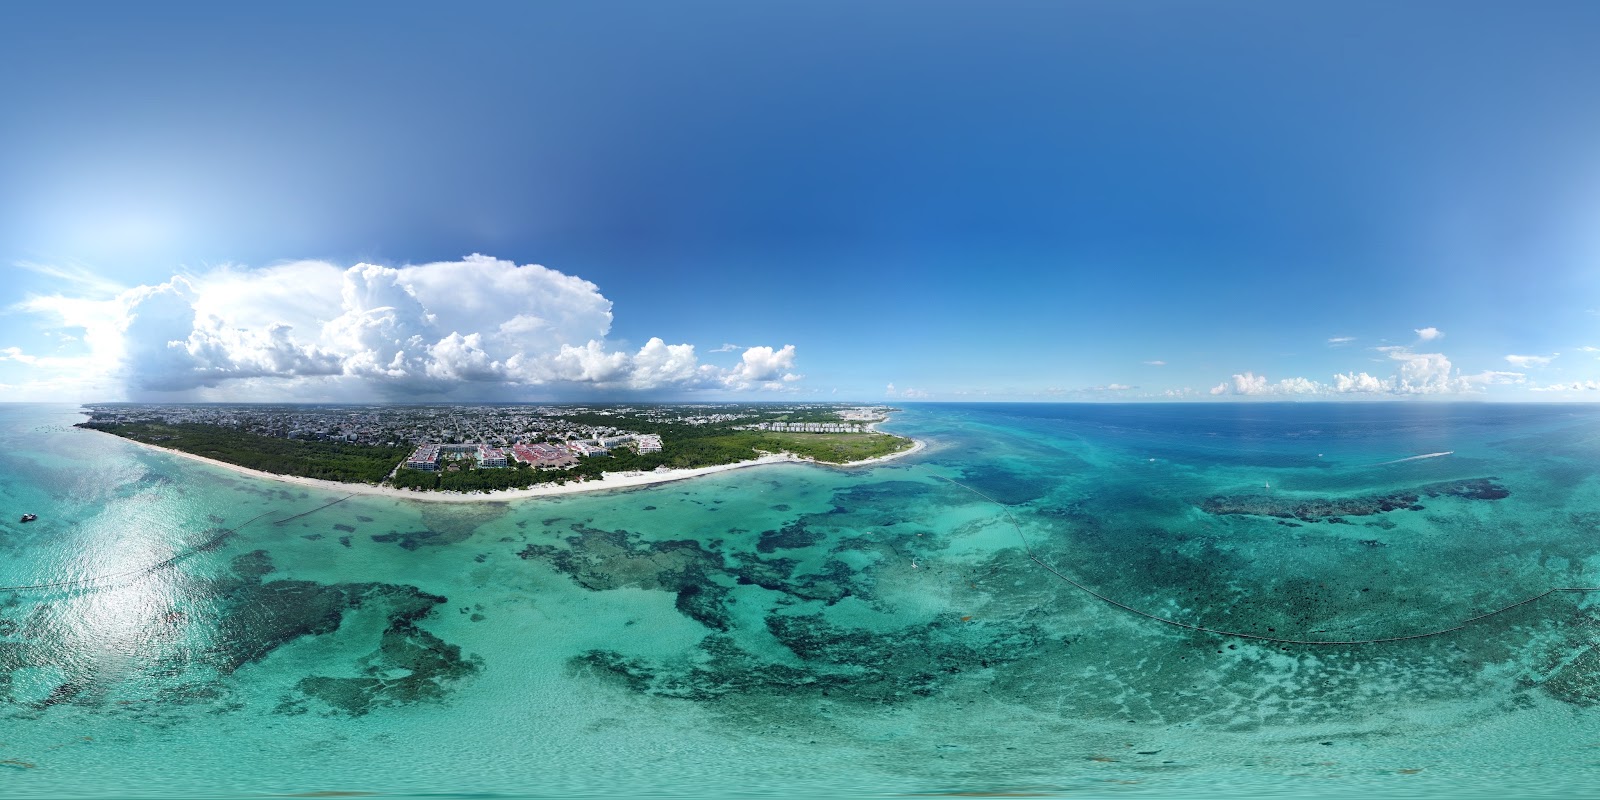 Photo of Playa Punta Esmeralda and the settlement